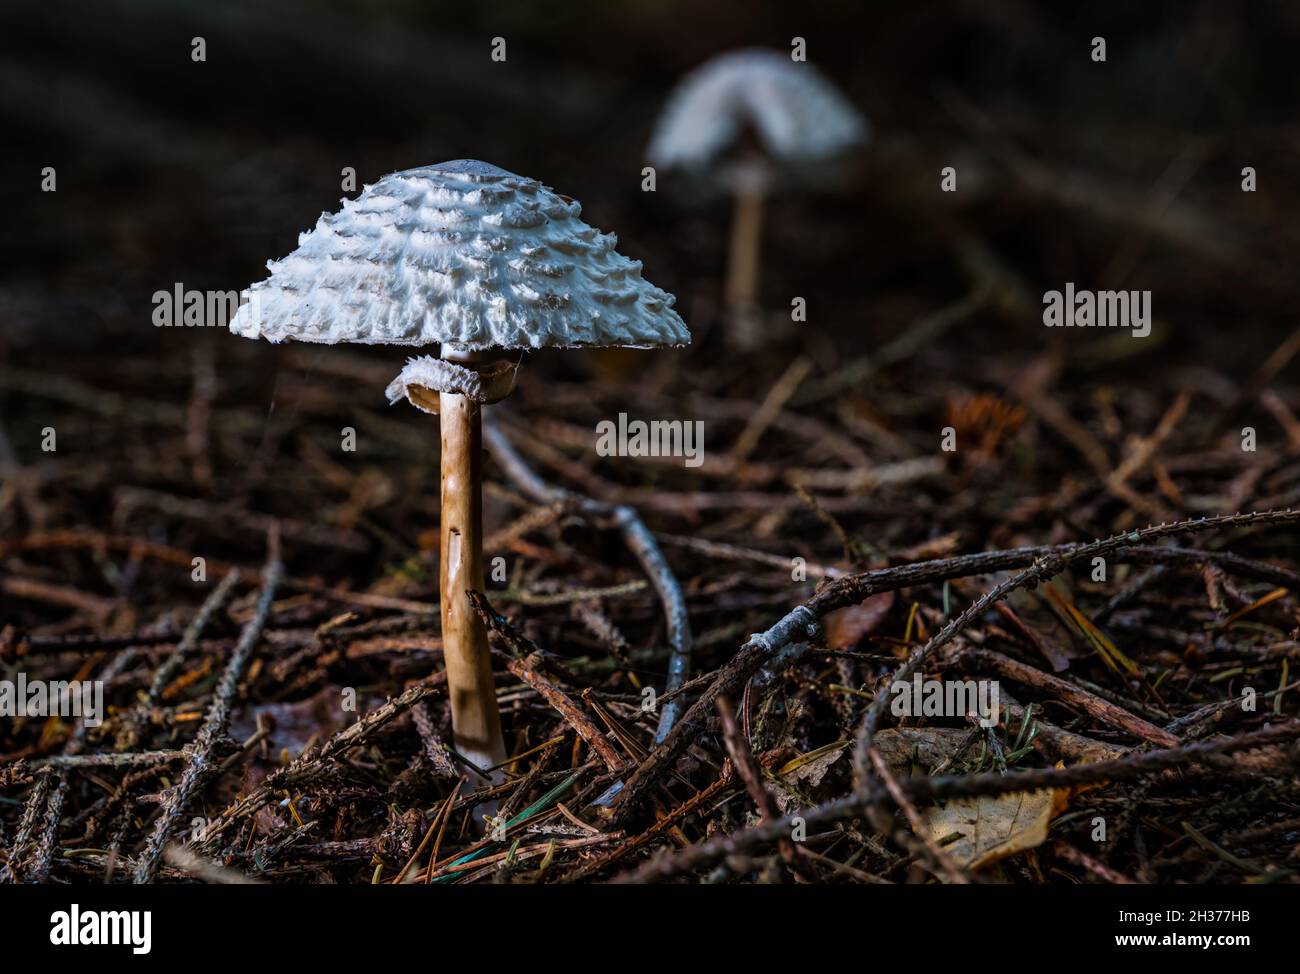 Shaggy parasol fungus or wild mushroom (Chlorophyllum rhacodes) growing on forest floor in woodland, Scotland, UK Stock Photo